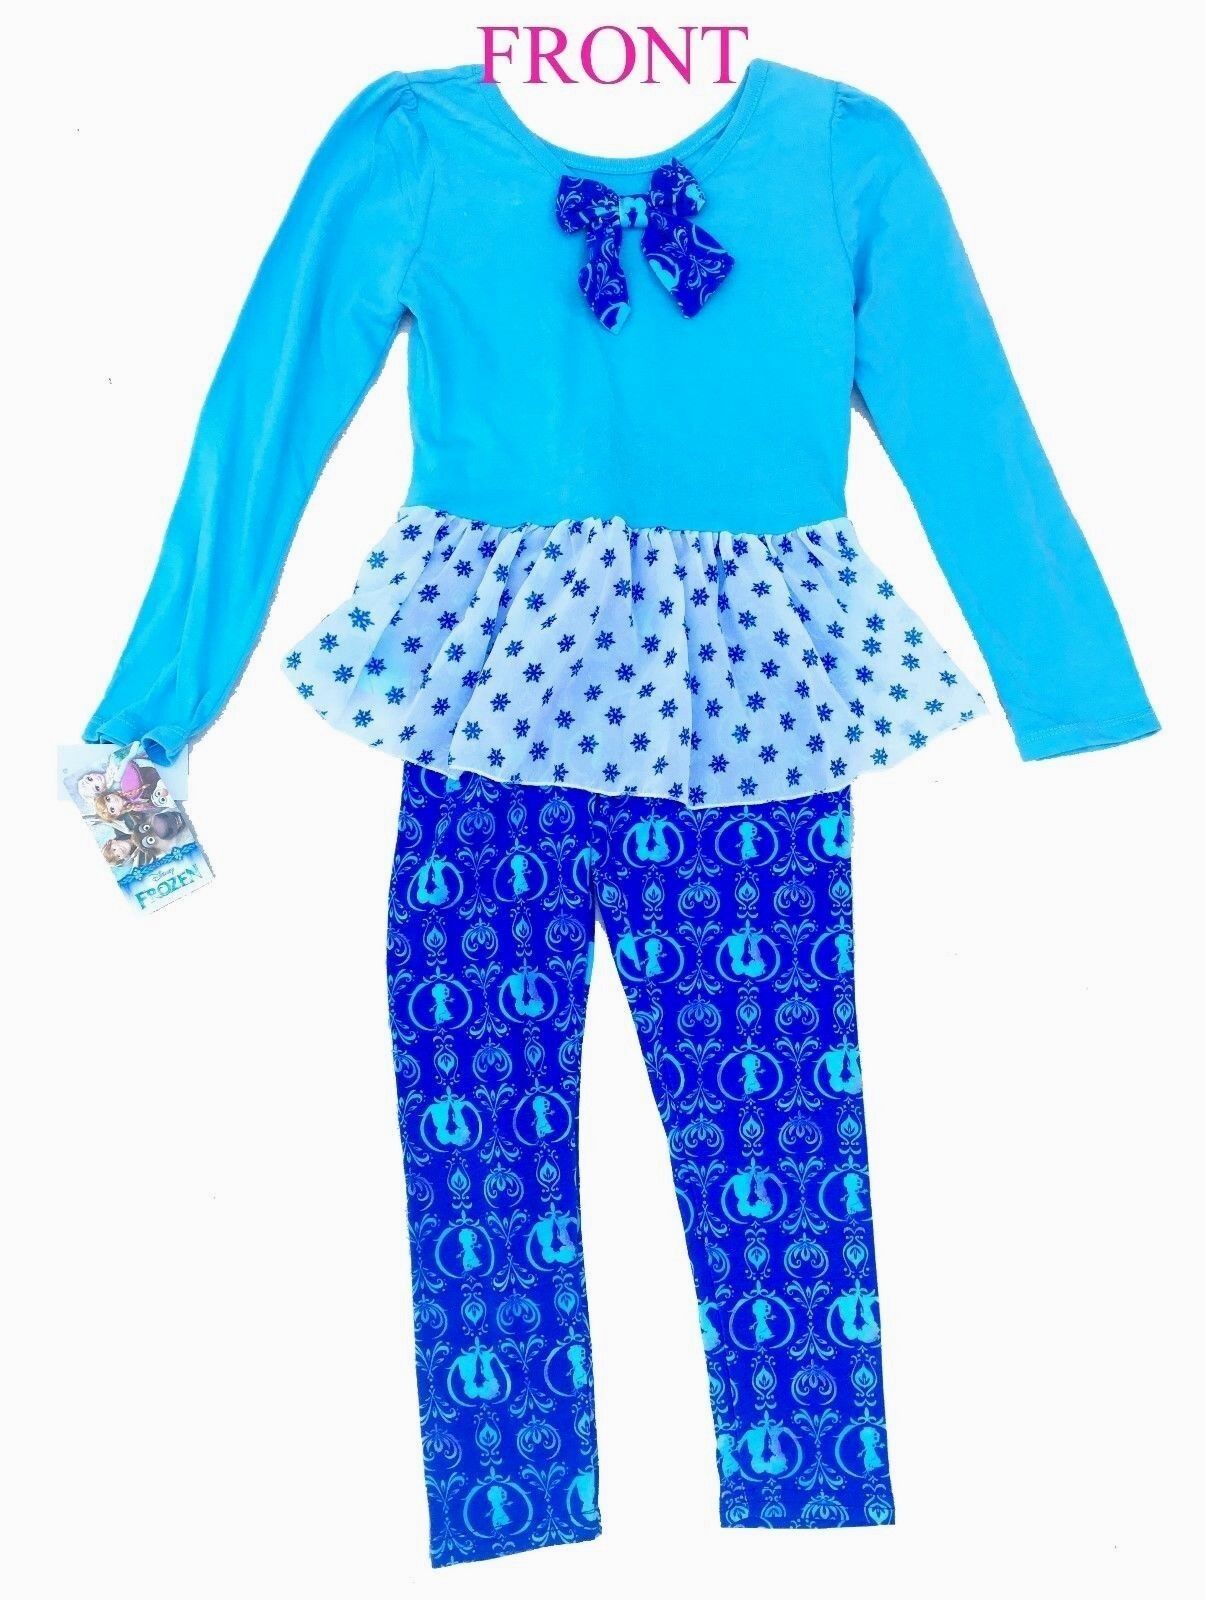 Primary image for Girls Disney Top and Legging Pajama Set Frozen Anna & Elsa Printed 2-piece